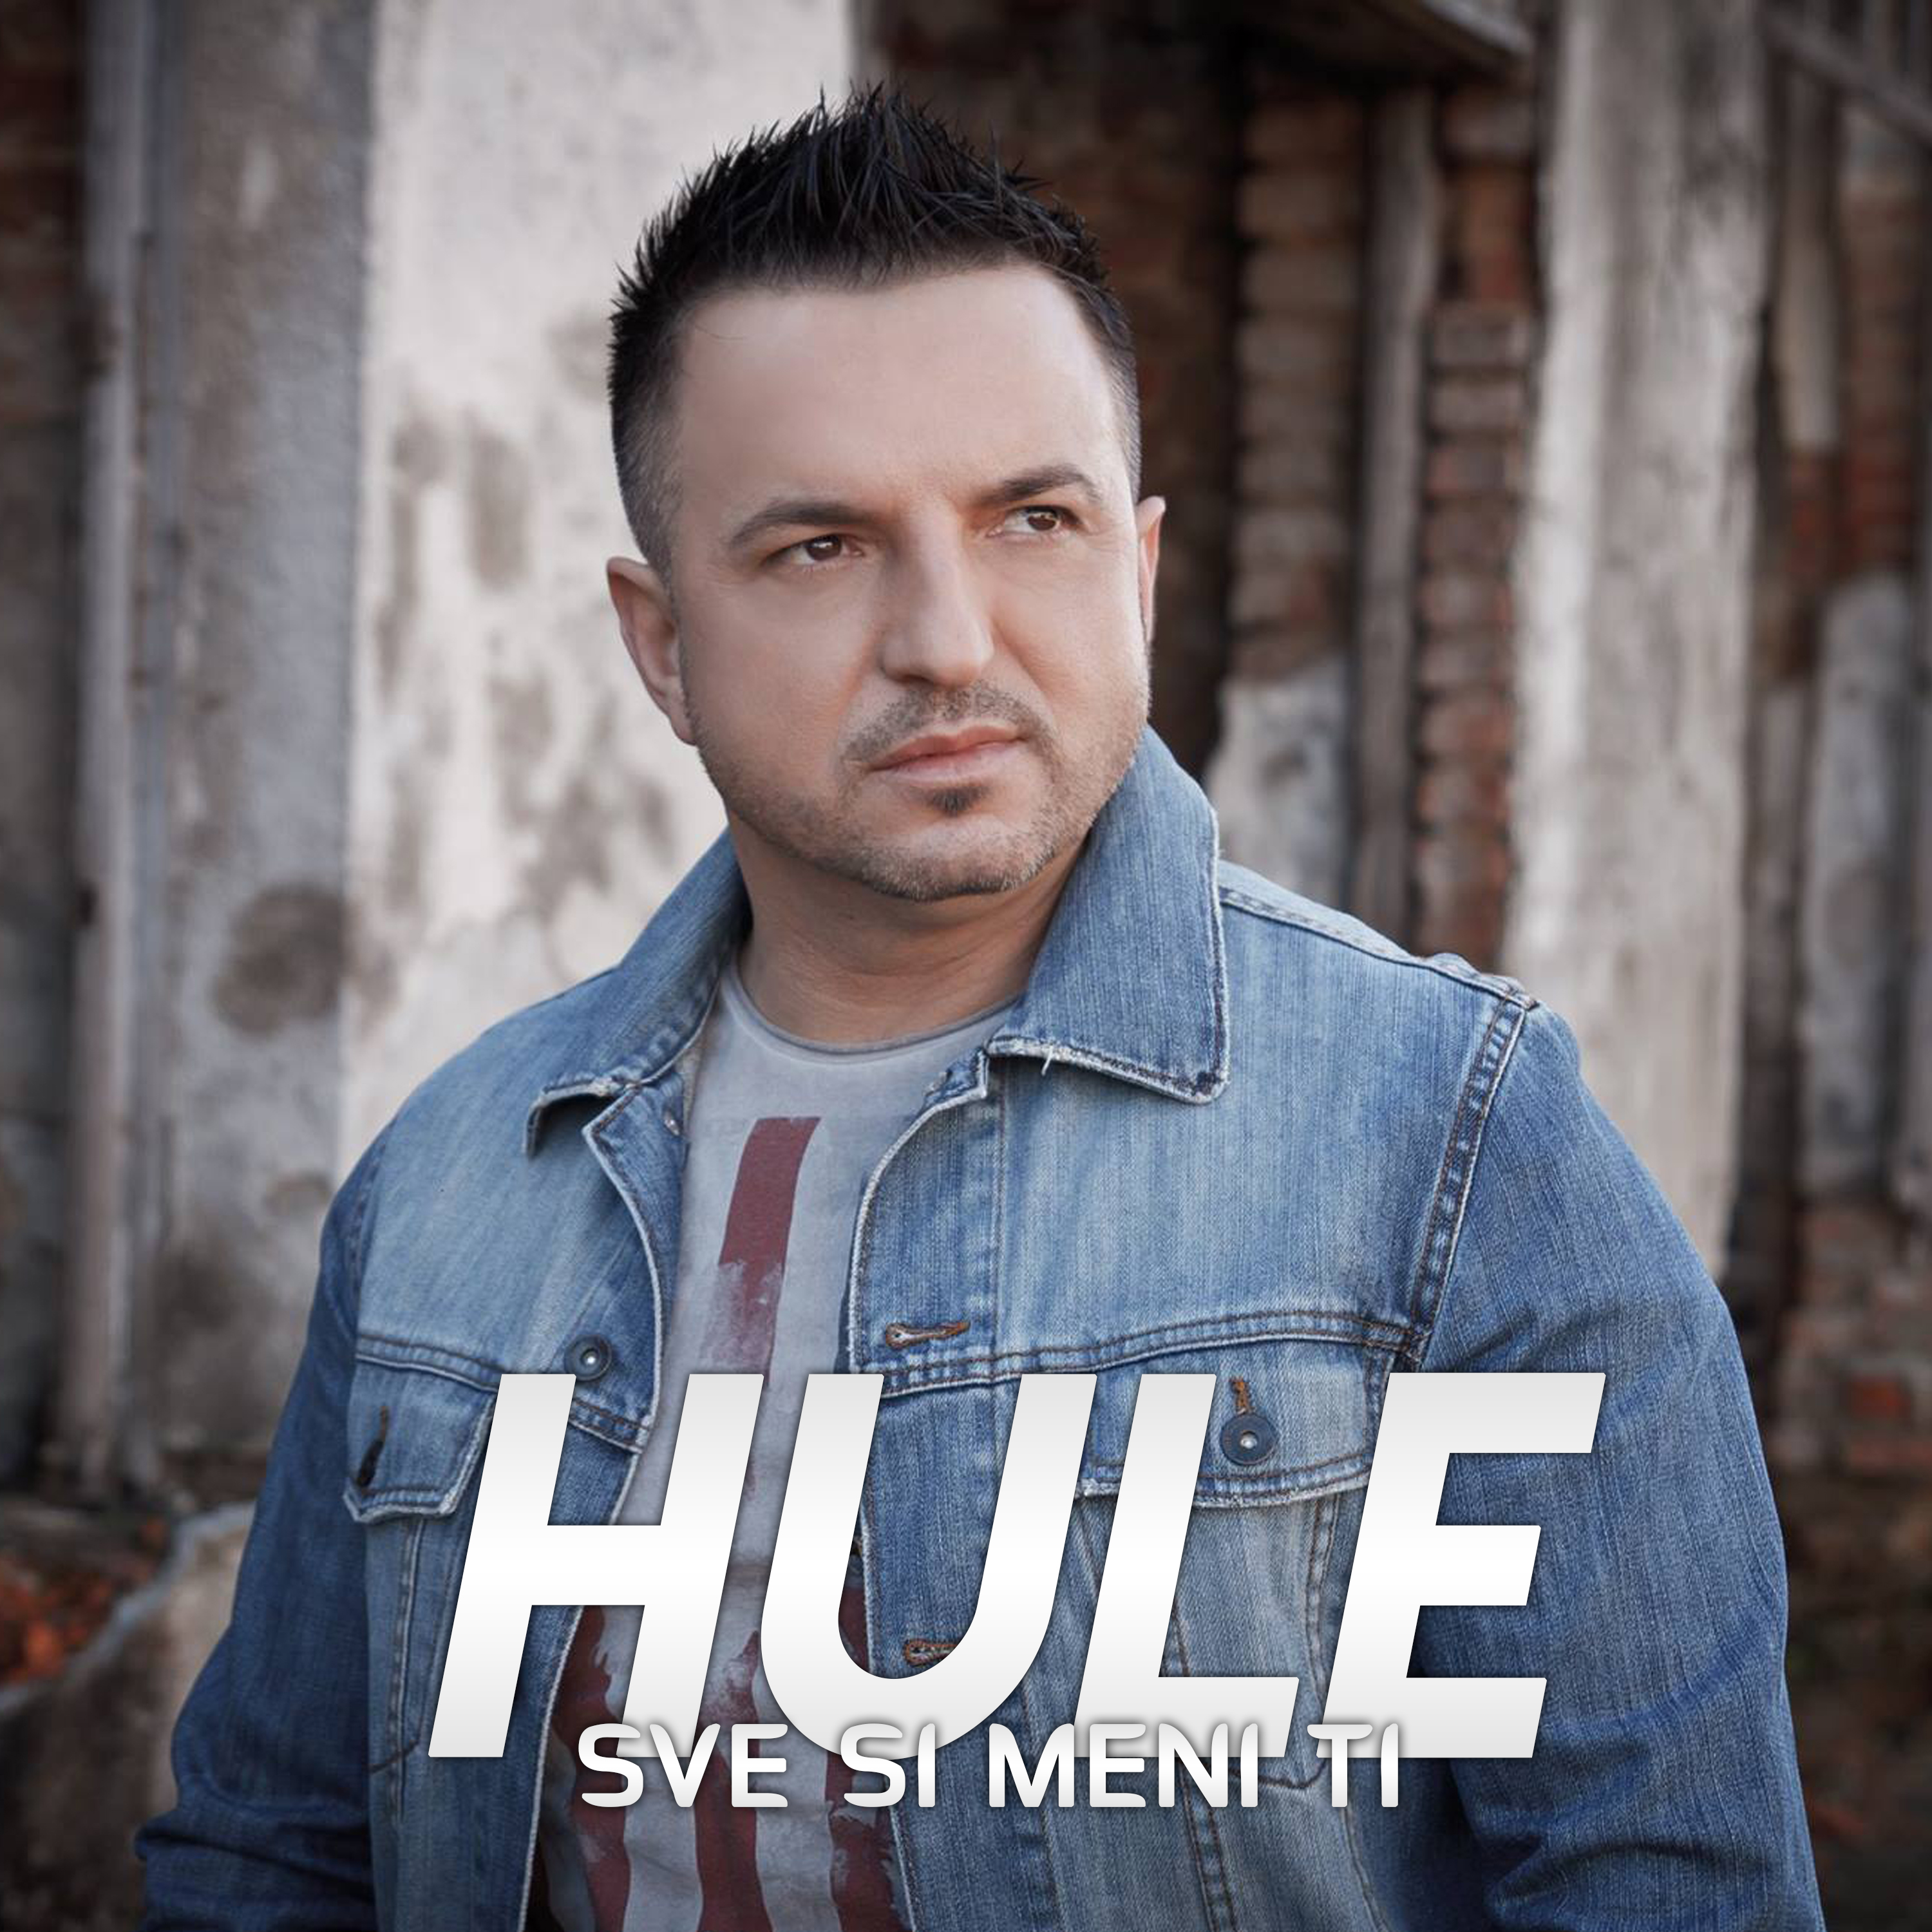 Hule - Sve si meni ti - Listen on Spotify, Deezer, YouTube, Google Play Music and Buy on Amazon, iTunes Google Play | EMDC Network